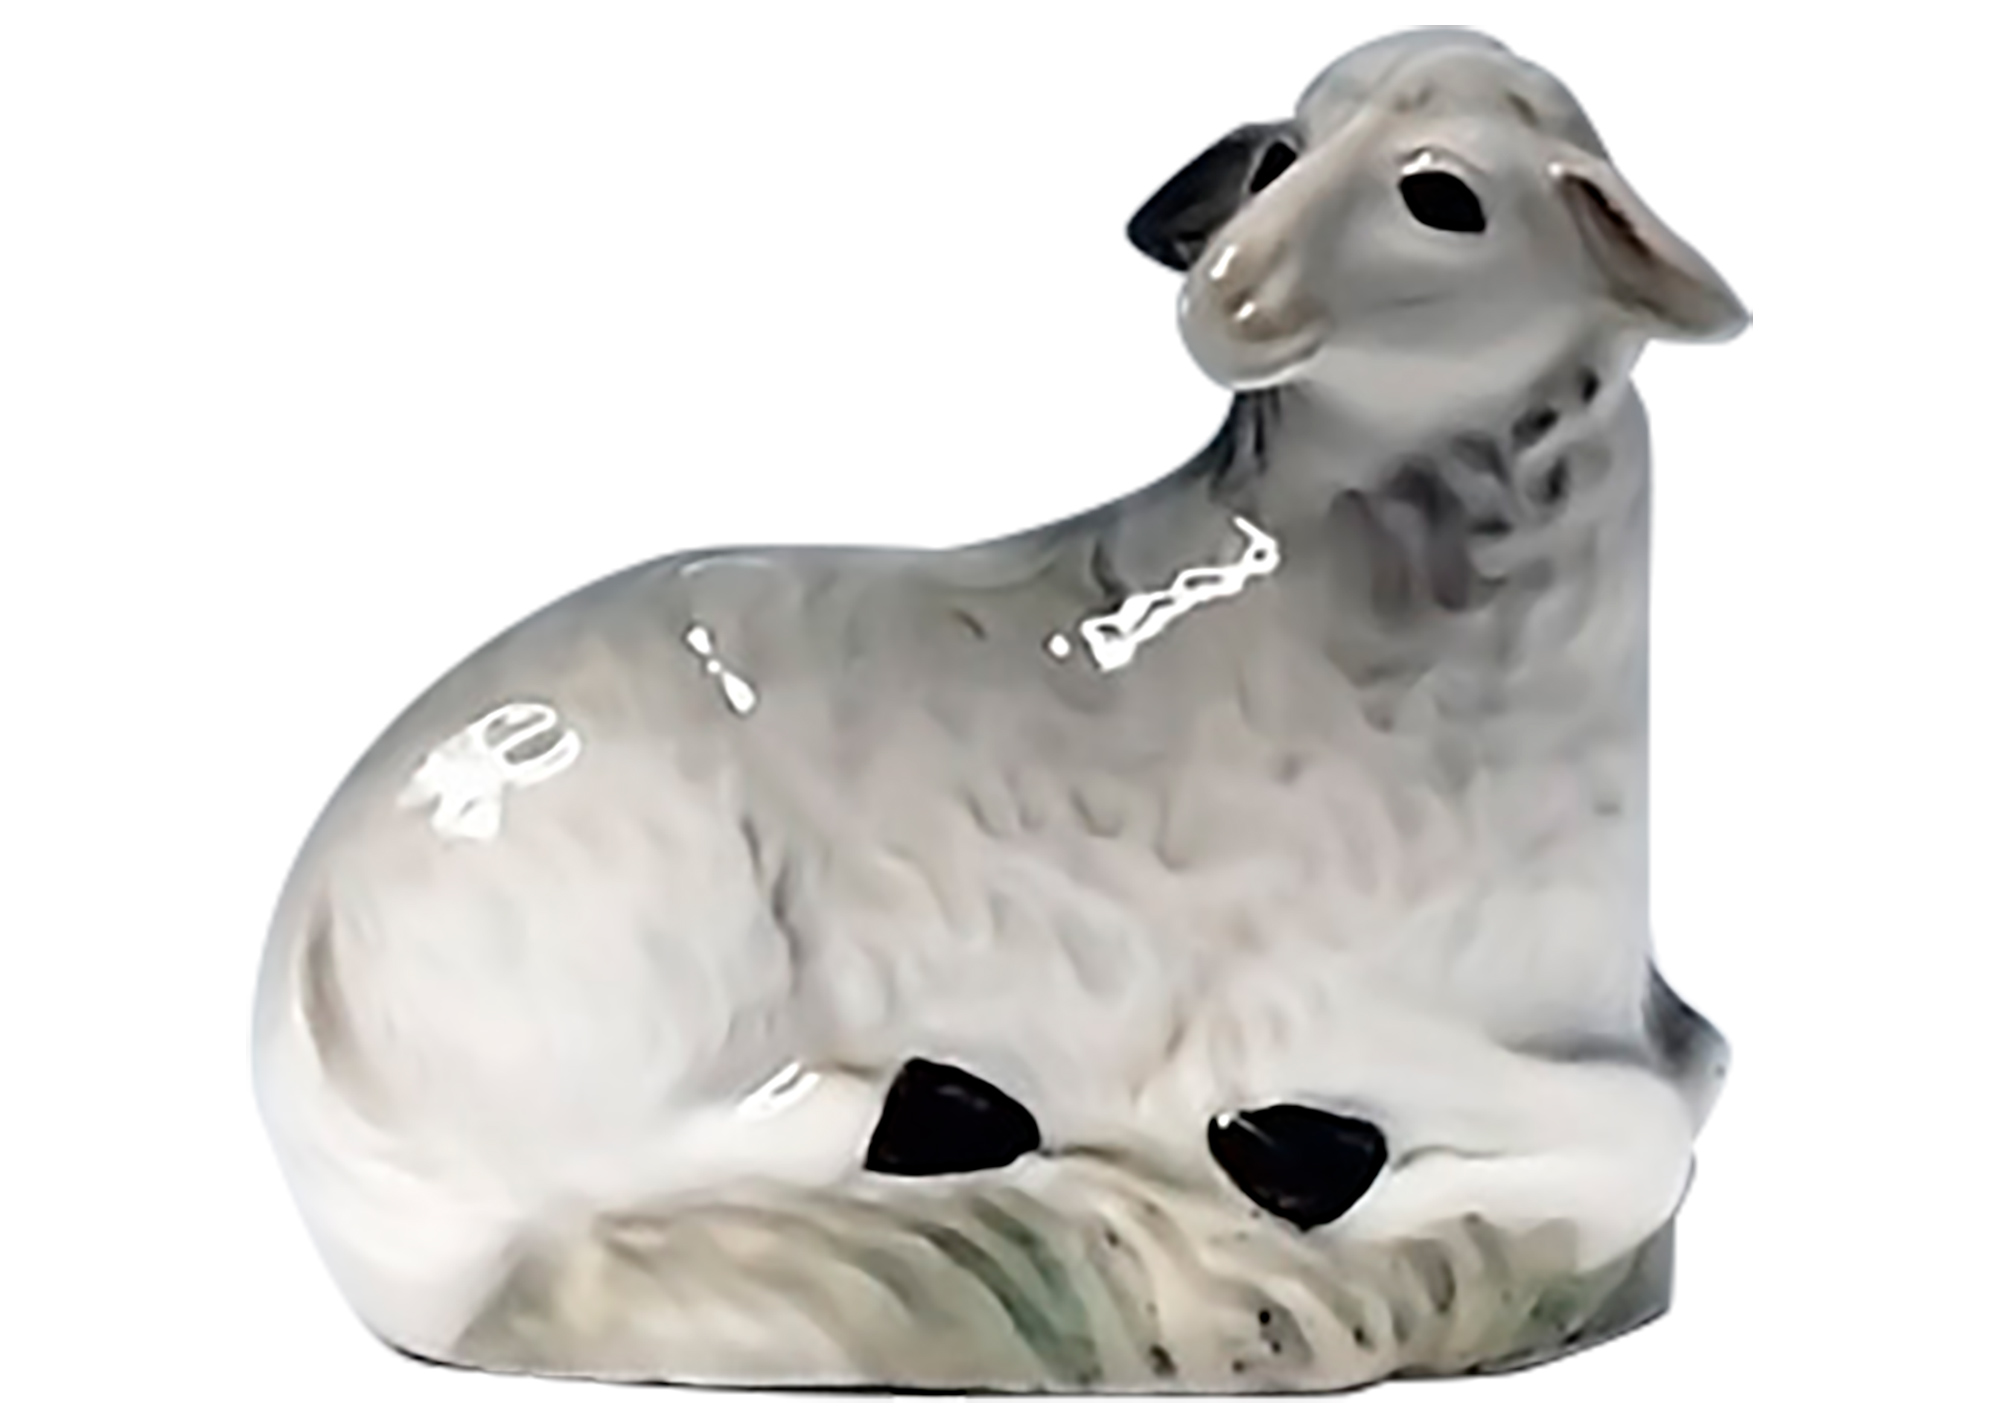 Buy Sheep on Grass Pedestal Figurine at GoldenCockerel.com